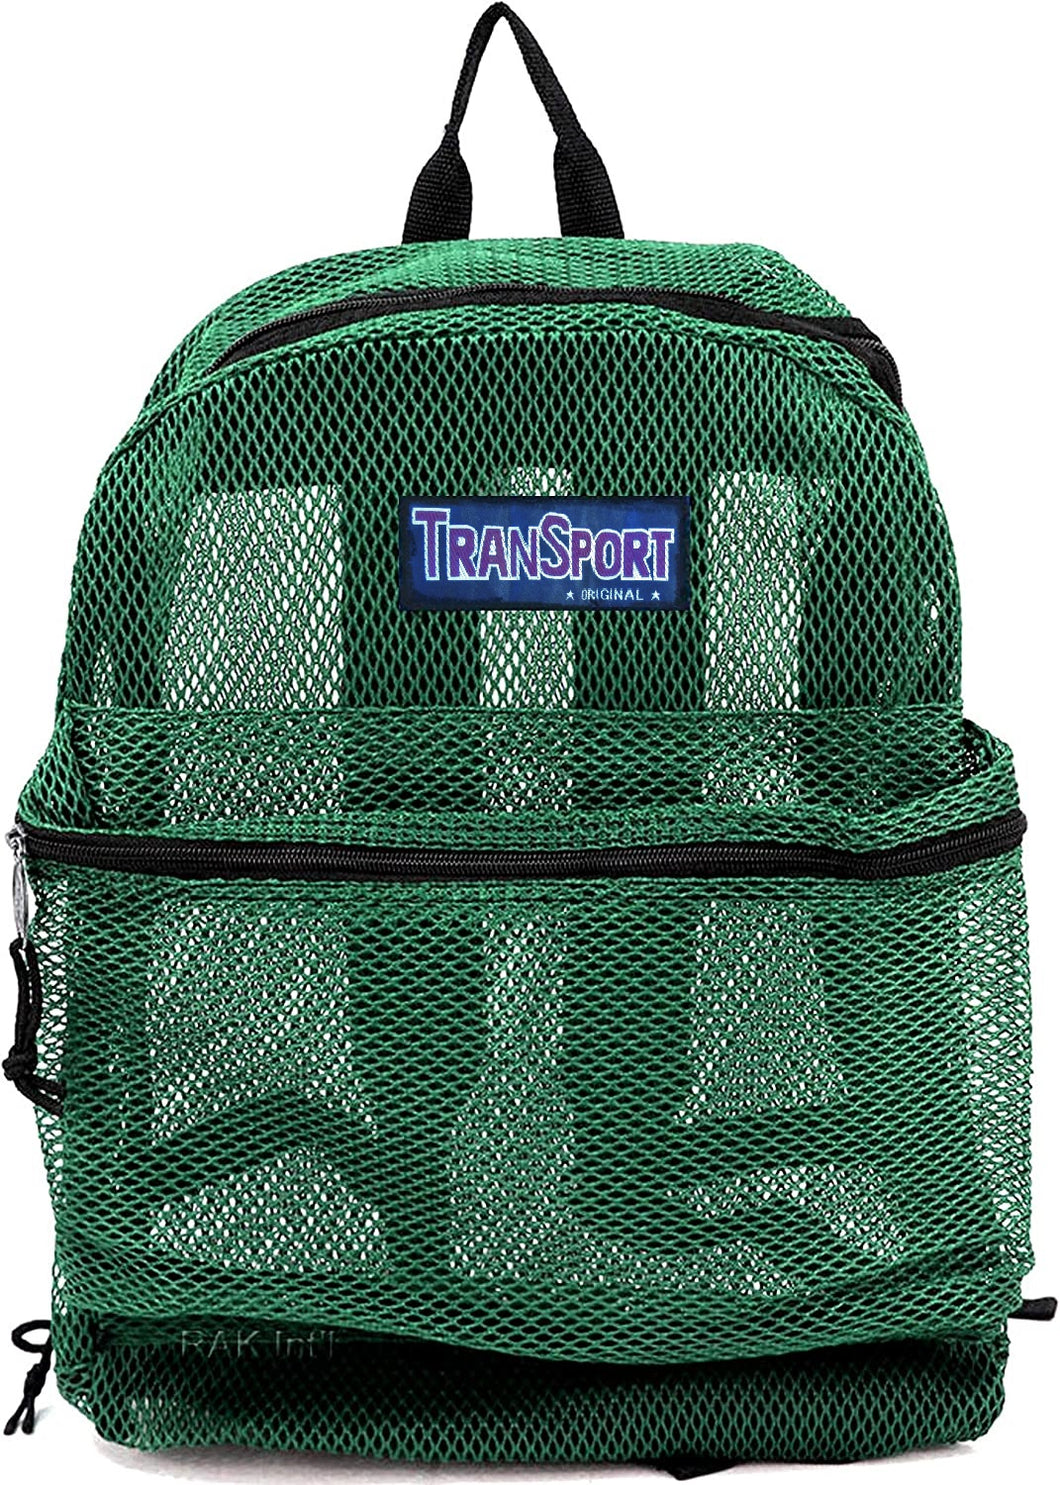 Transport Backpack Large 16 inch Mesh Green